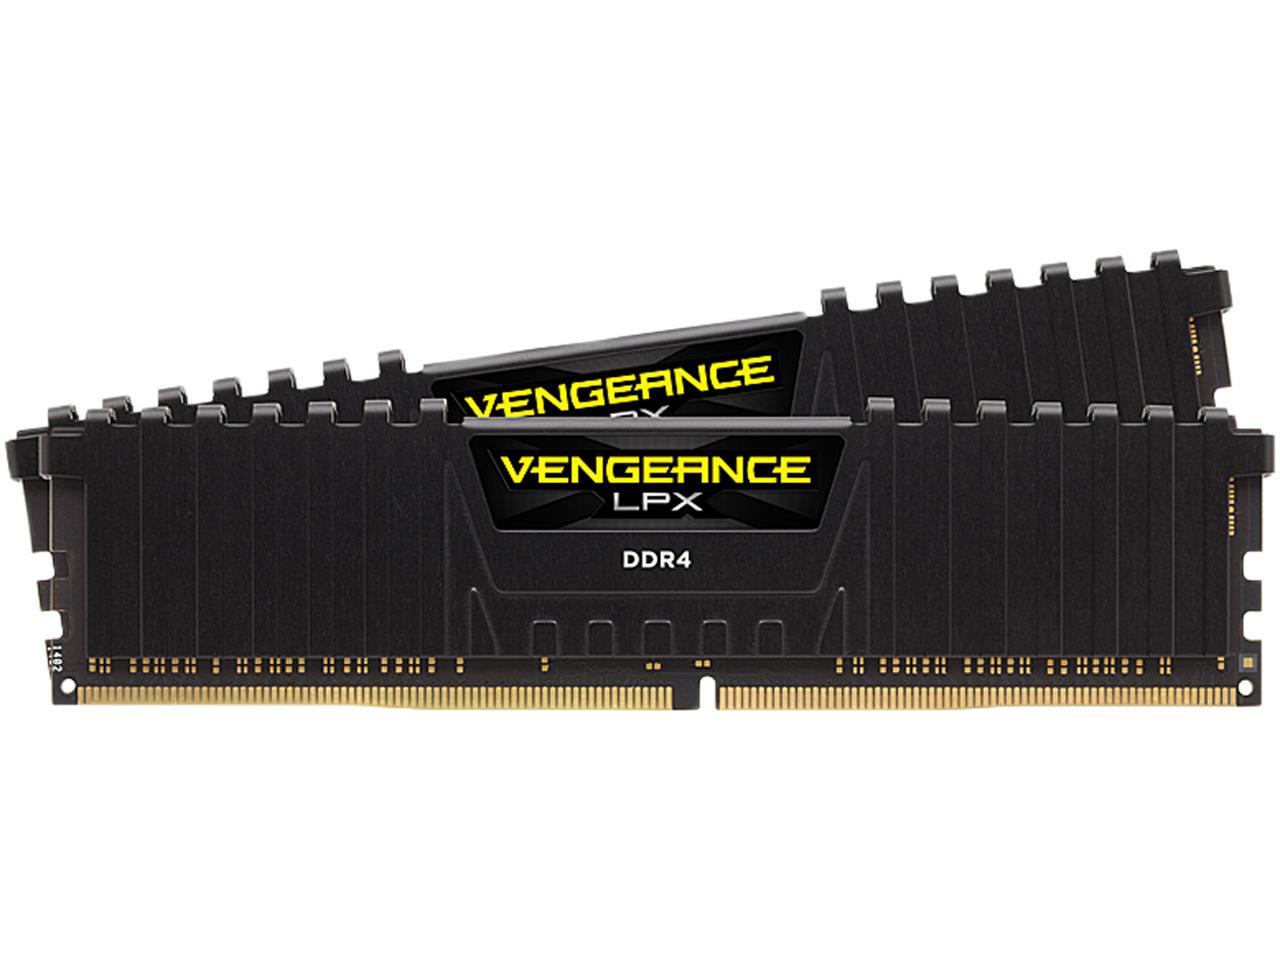 CORSAIR Vengeance LPX 32GB (2 x 16GB) 288-Pin DDR4 SDRAM DDR4 3200 CL 16 Desktop Memory $104.99